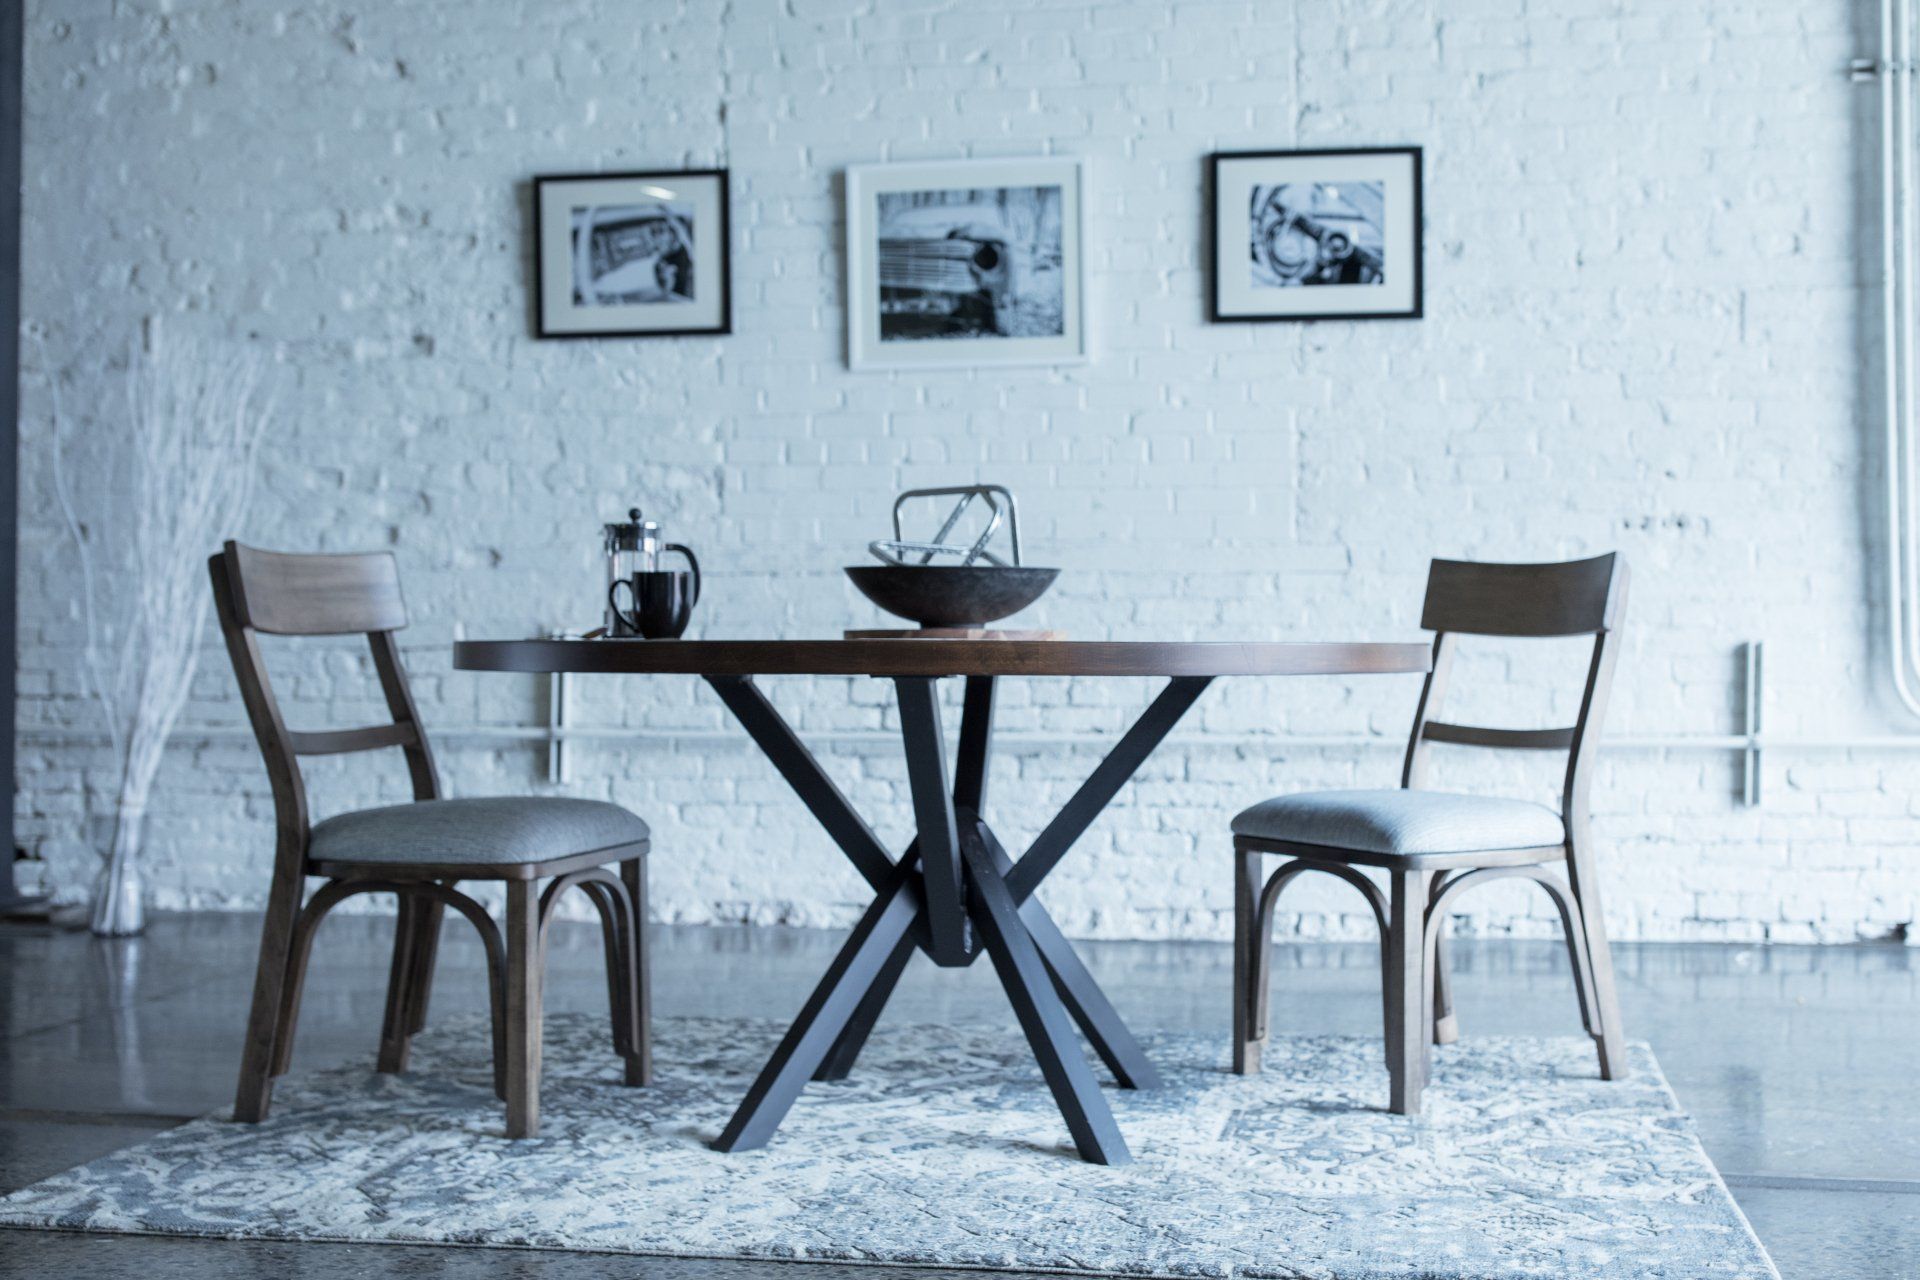 Custom furniture by Lancaster Iron & Wood